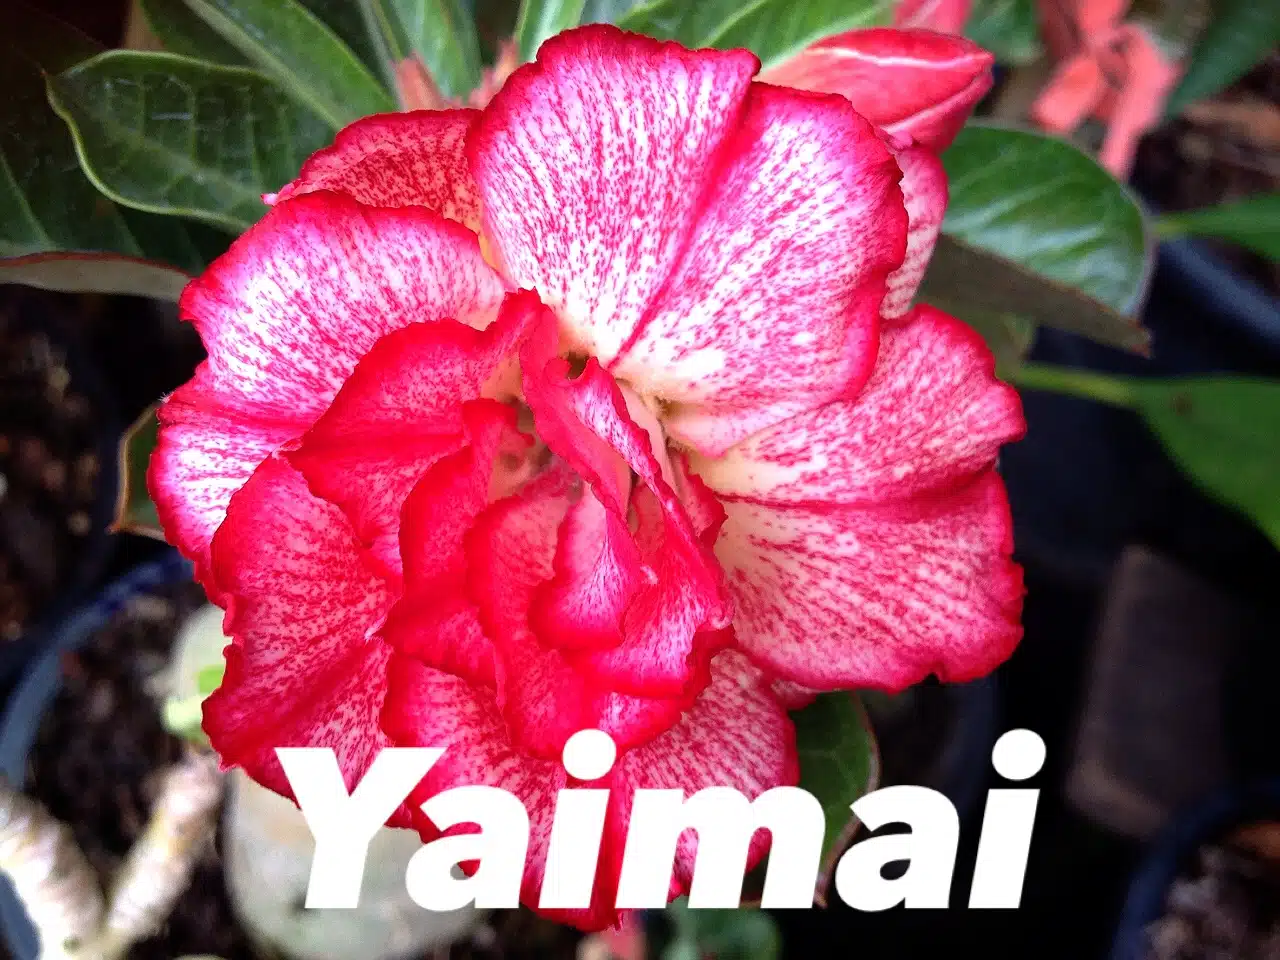 Buy Desert Rose Adenium obesum 'Yaimai' online